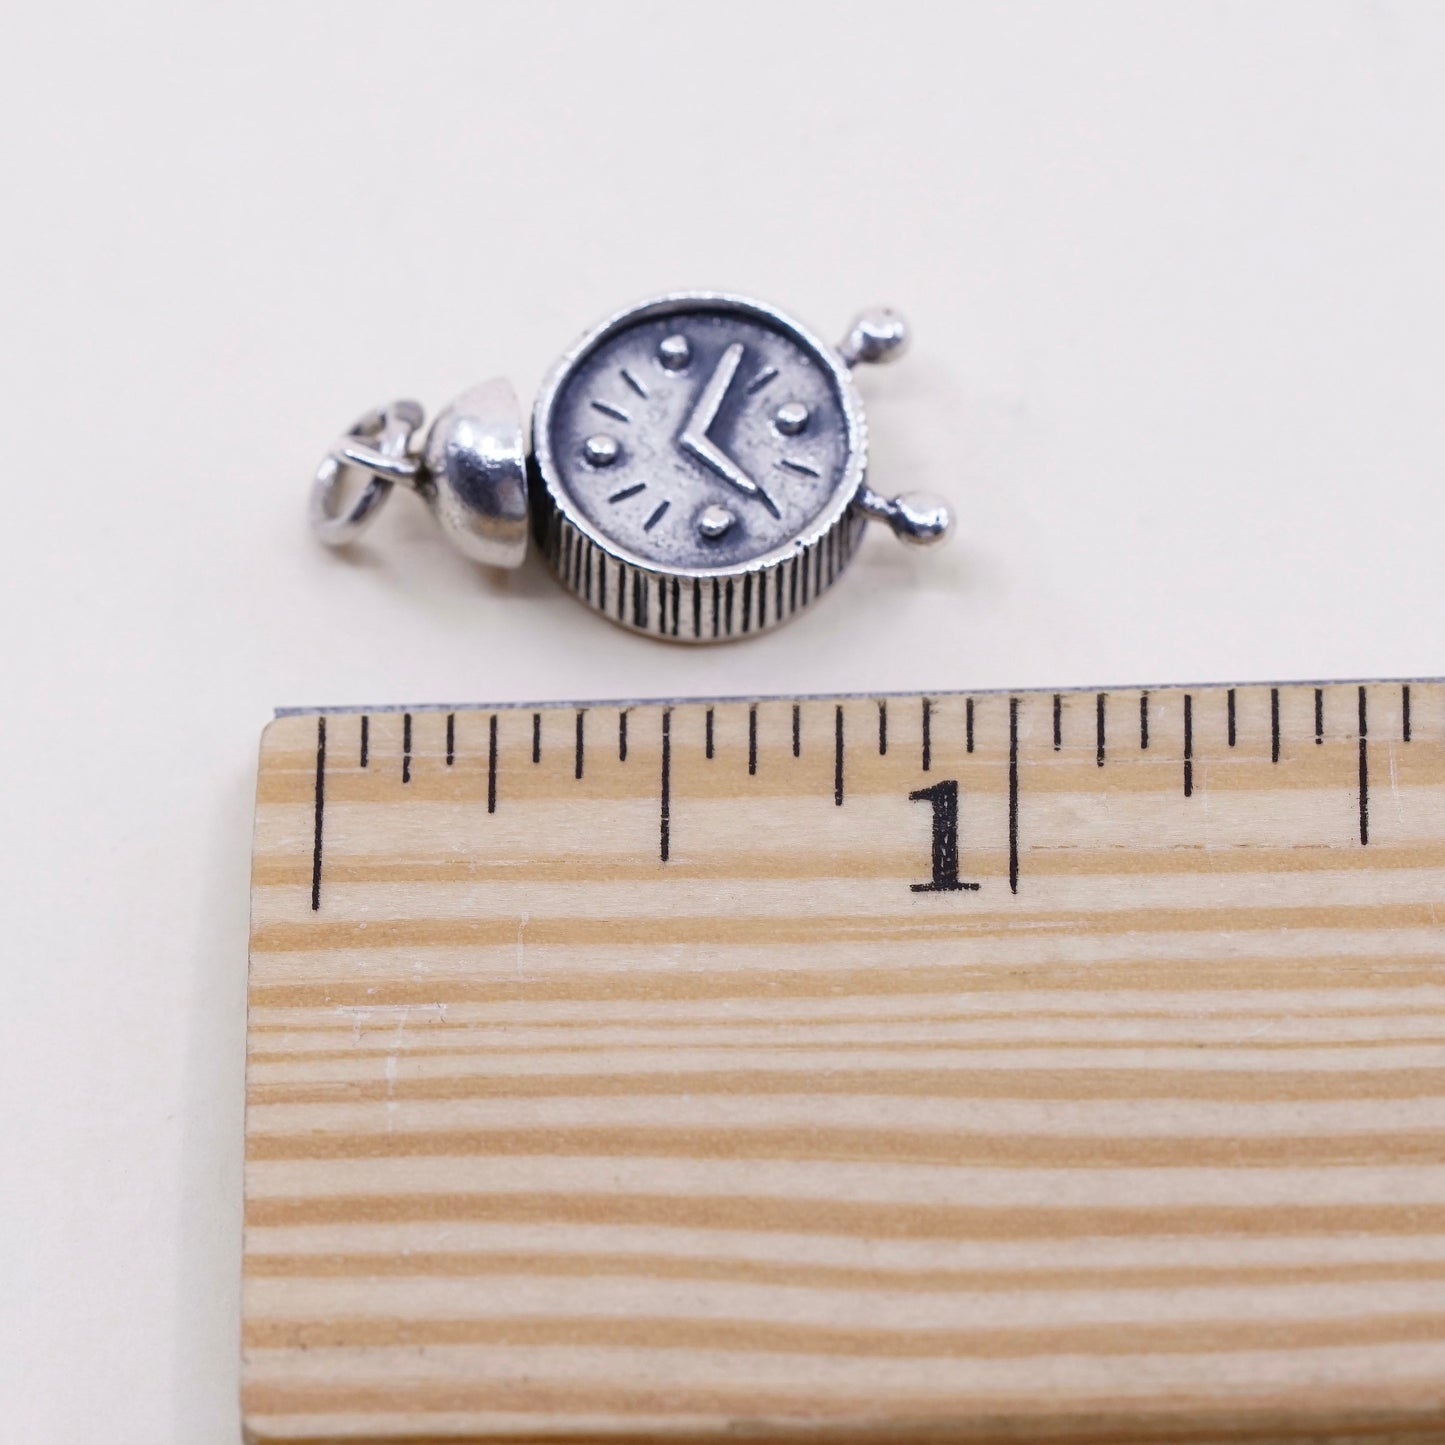 Vintage danecraft sterling silver handmade pendant, 925 old fashion clock charm